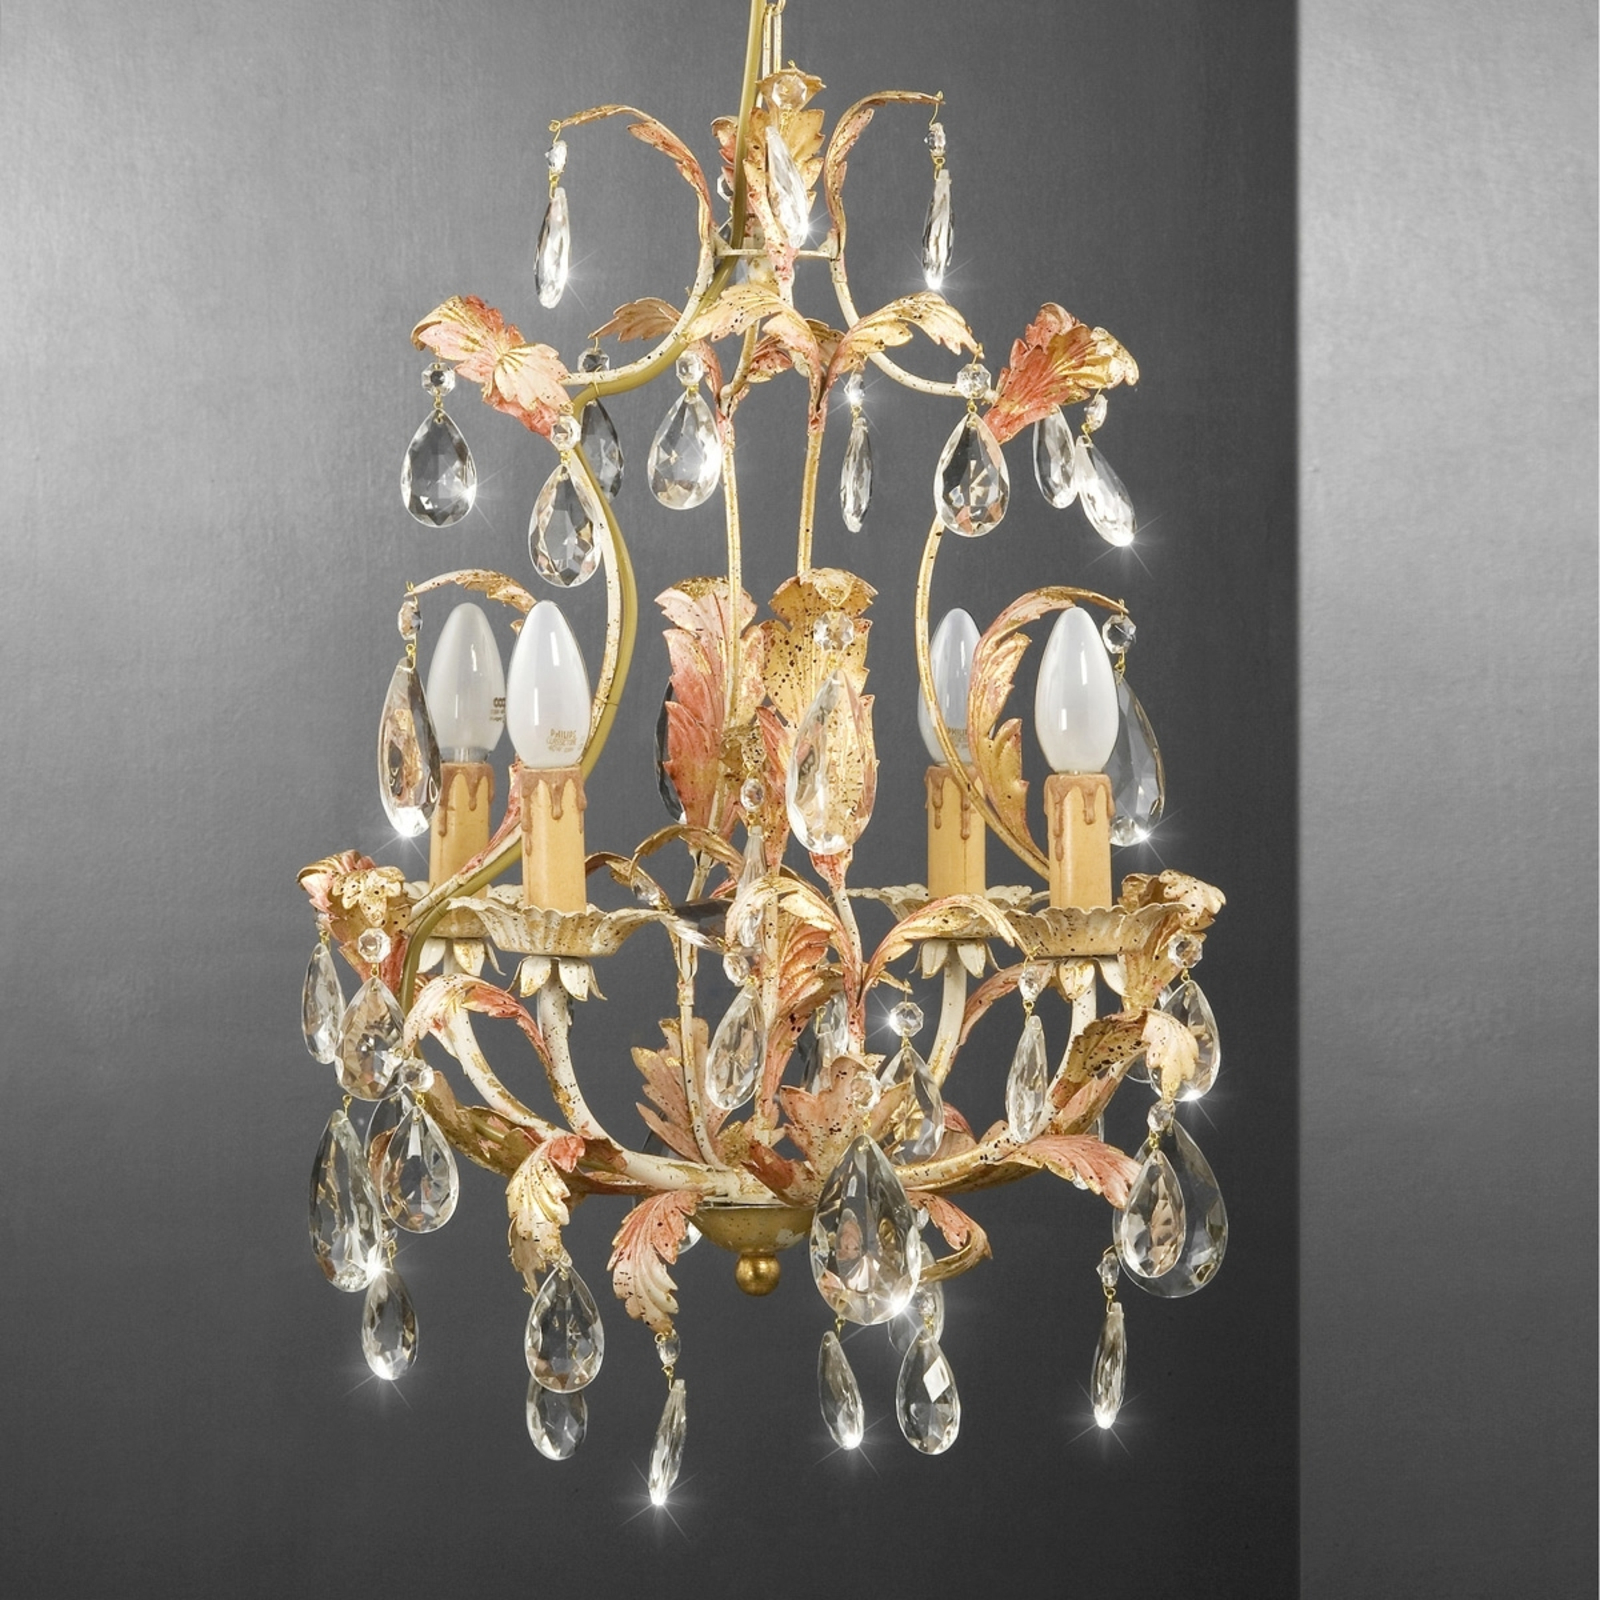 MESSINA striking chandelier glass